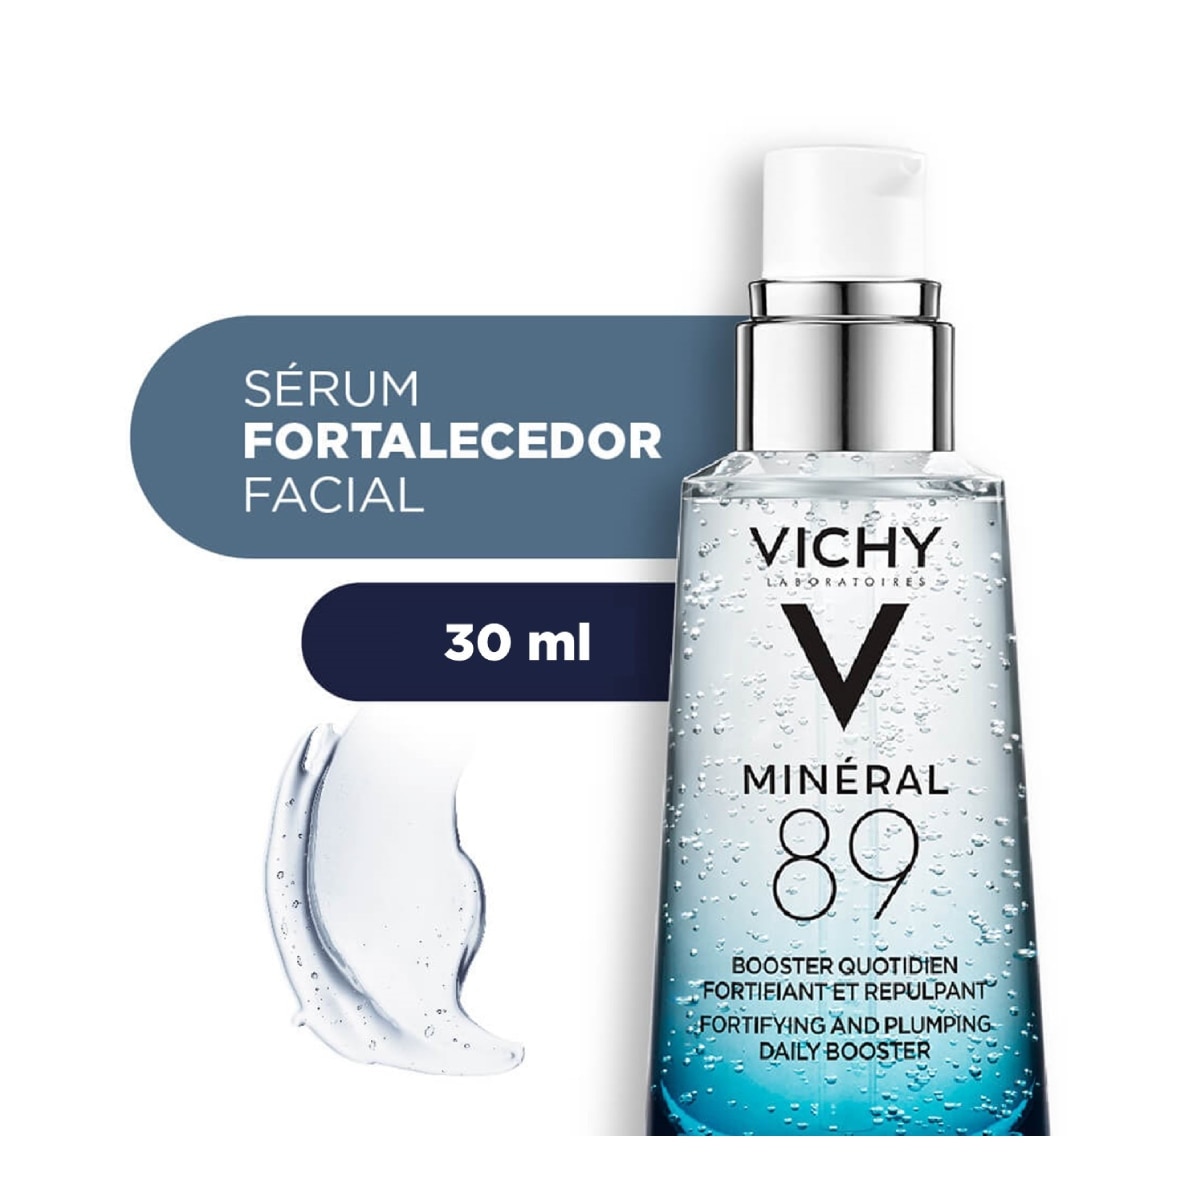 Gel Hidratante Facial Vichy Mineral 89 30ml